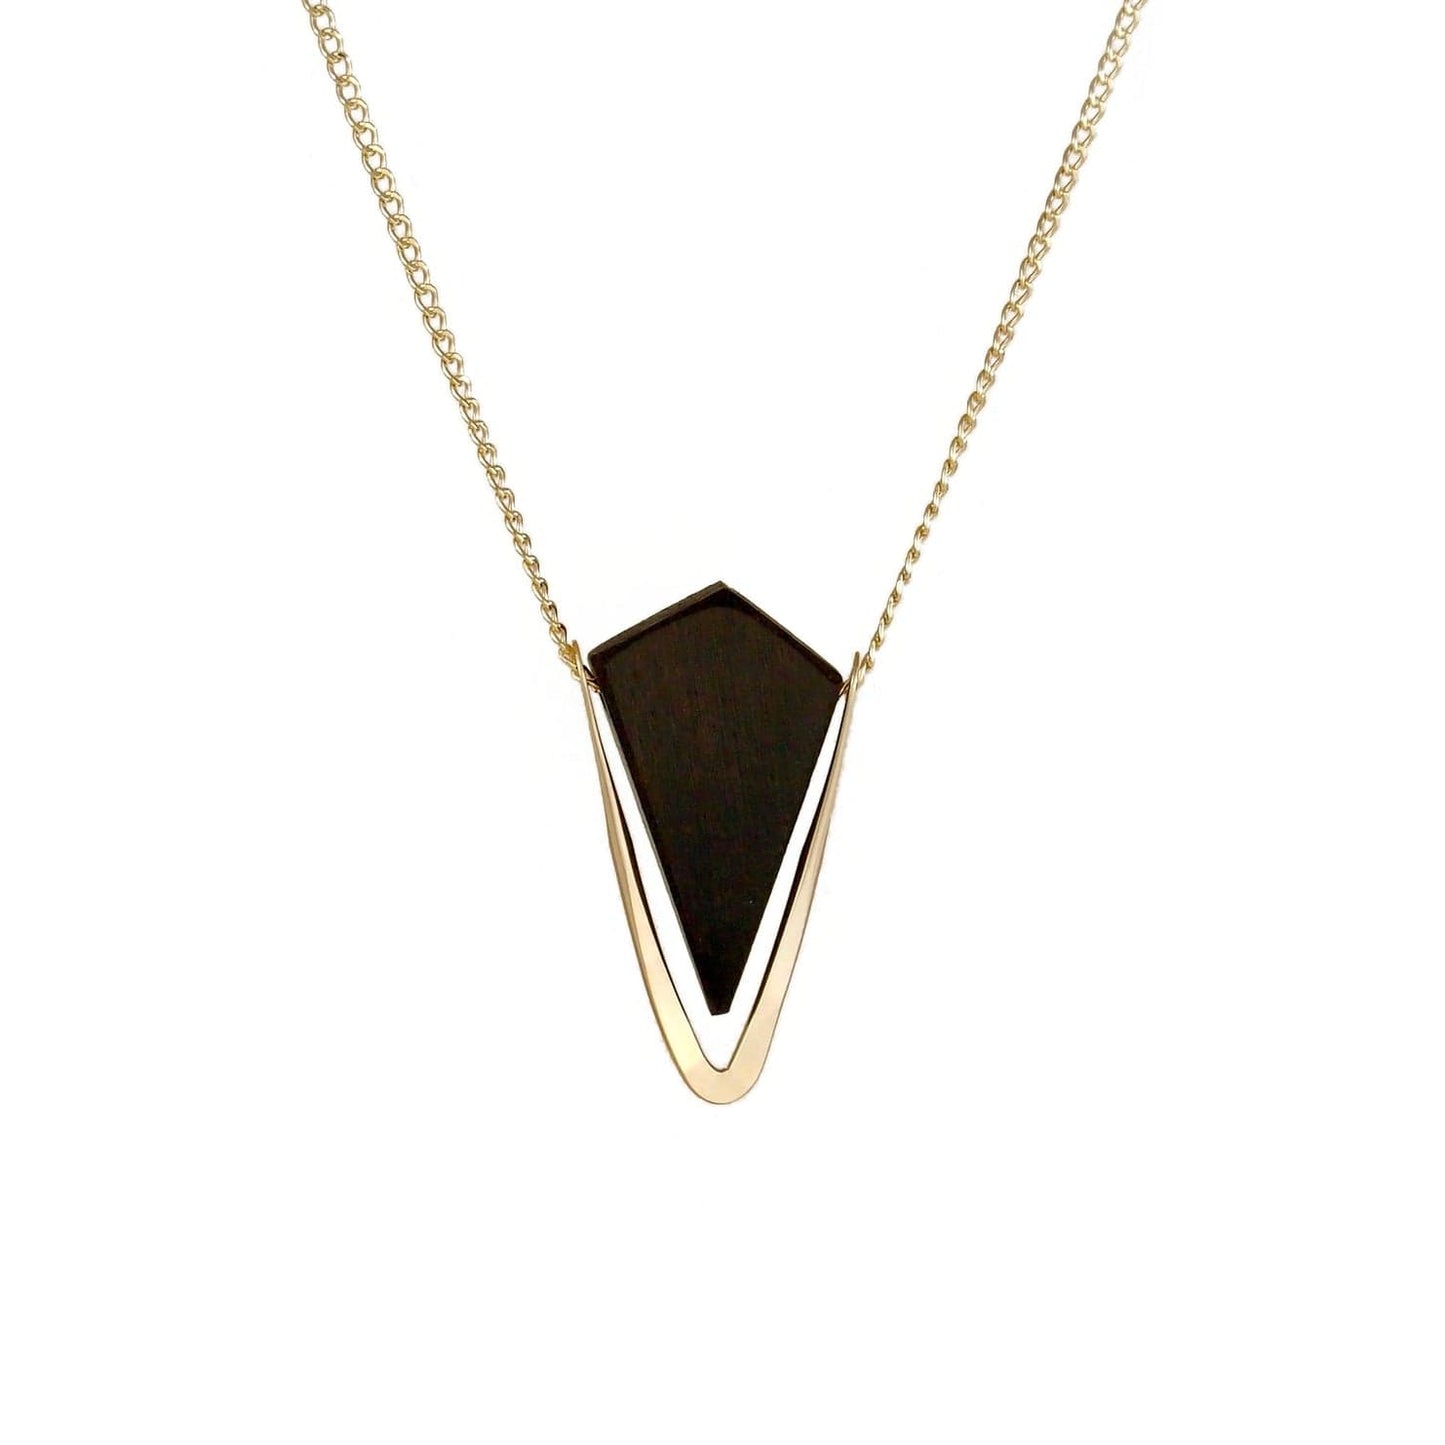 NKL-GF Ebony Pyramid Necklace Gold